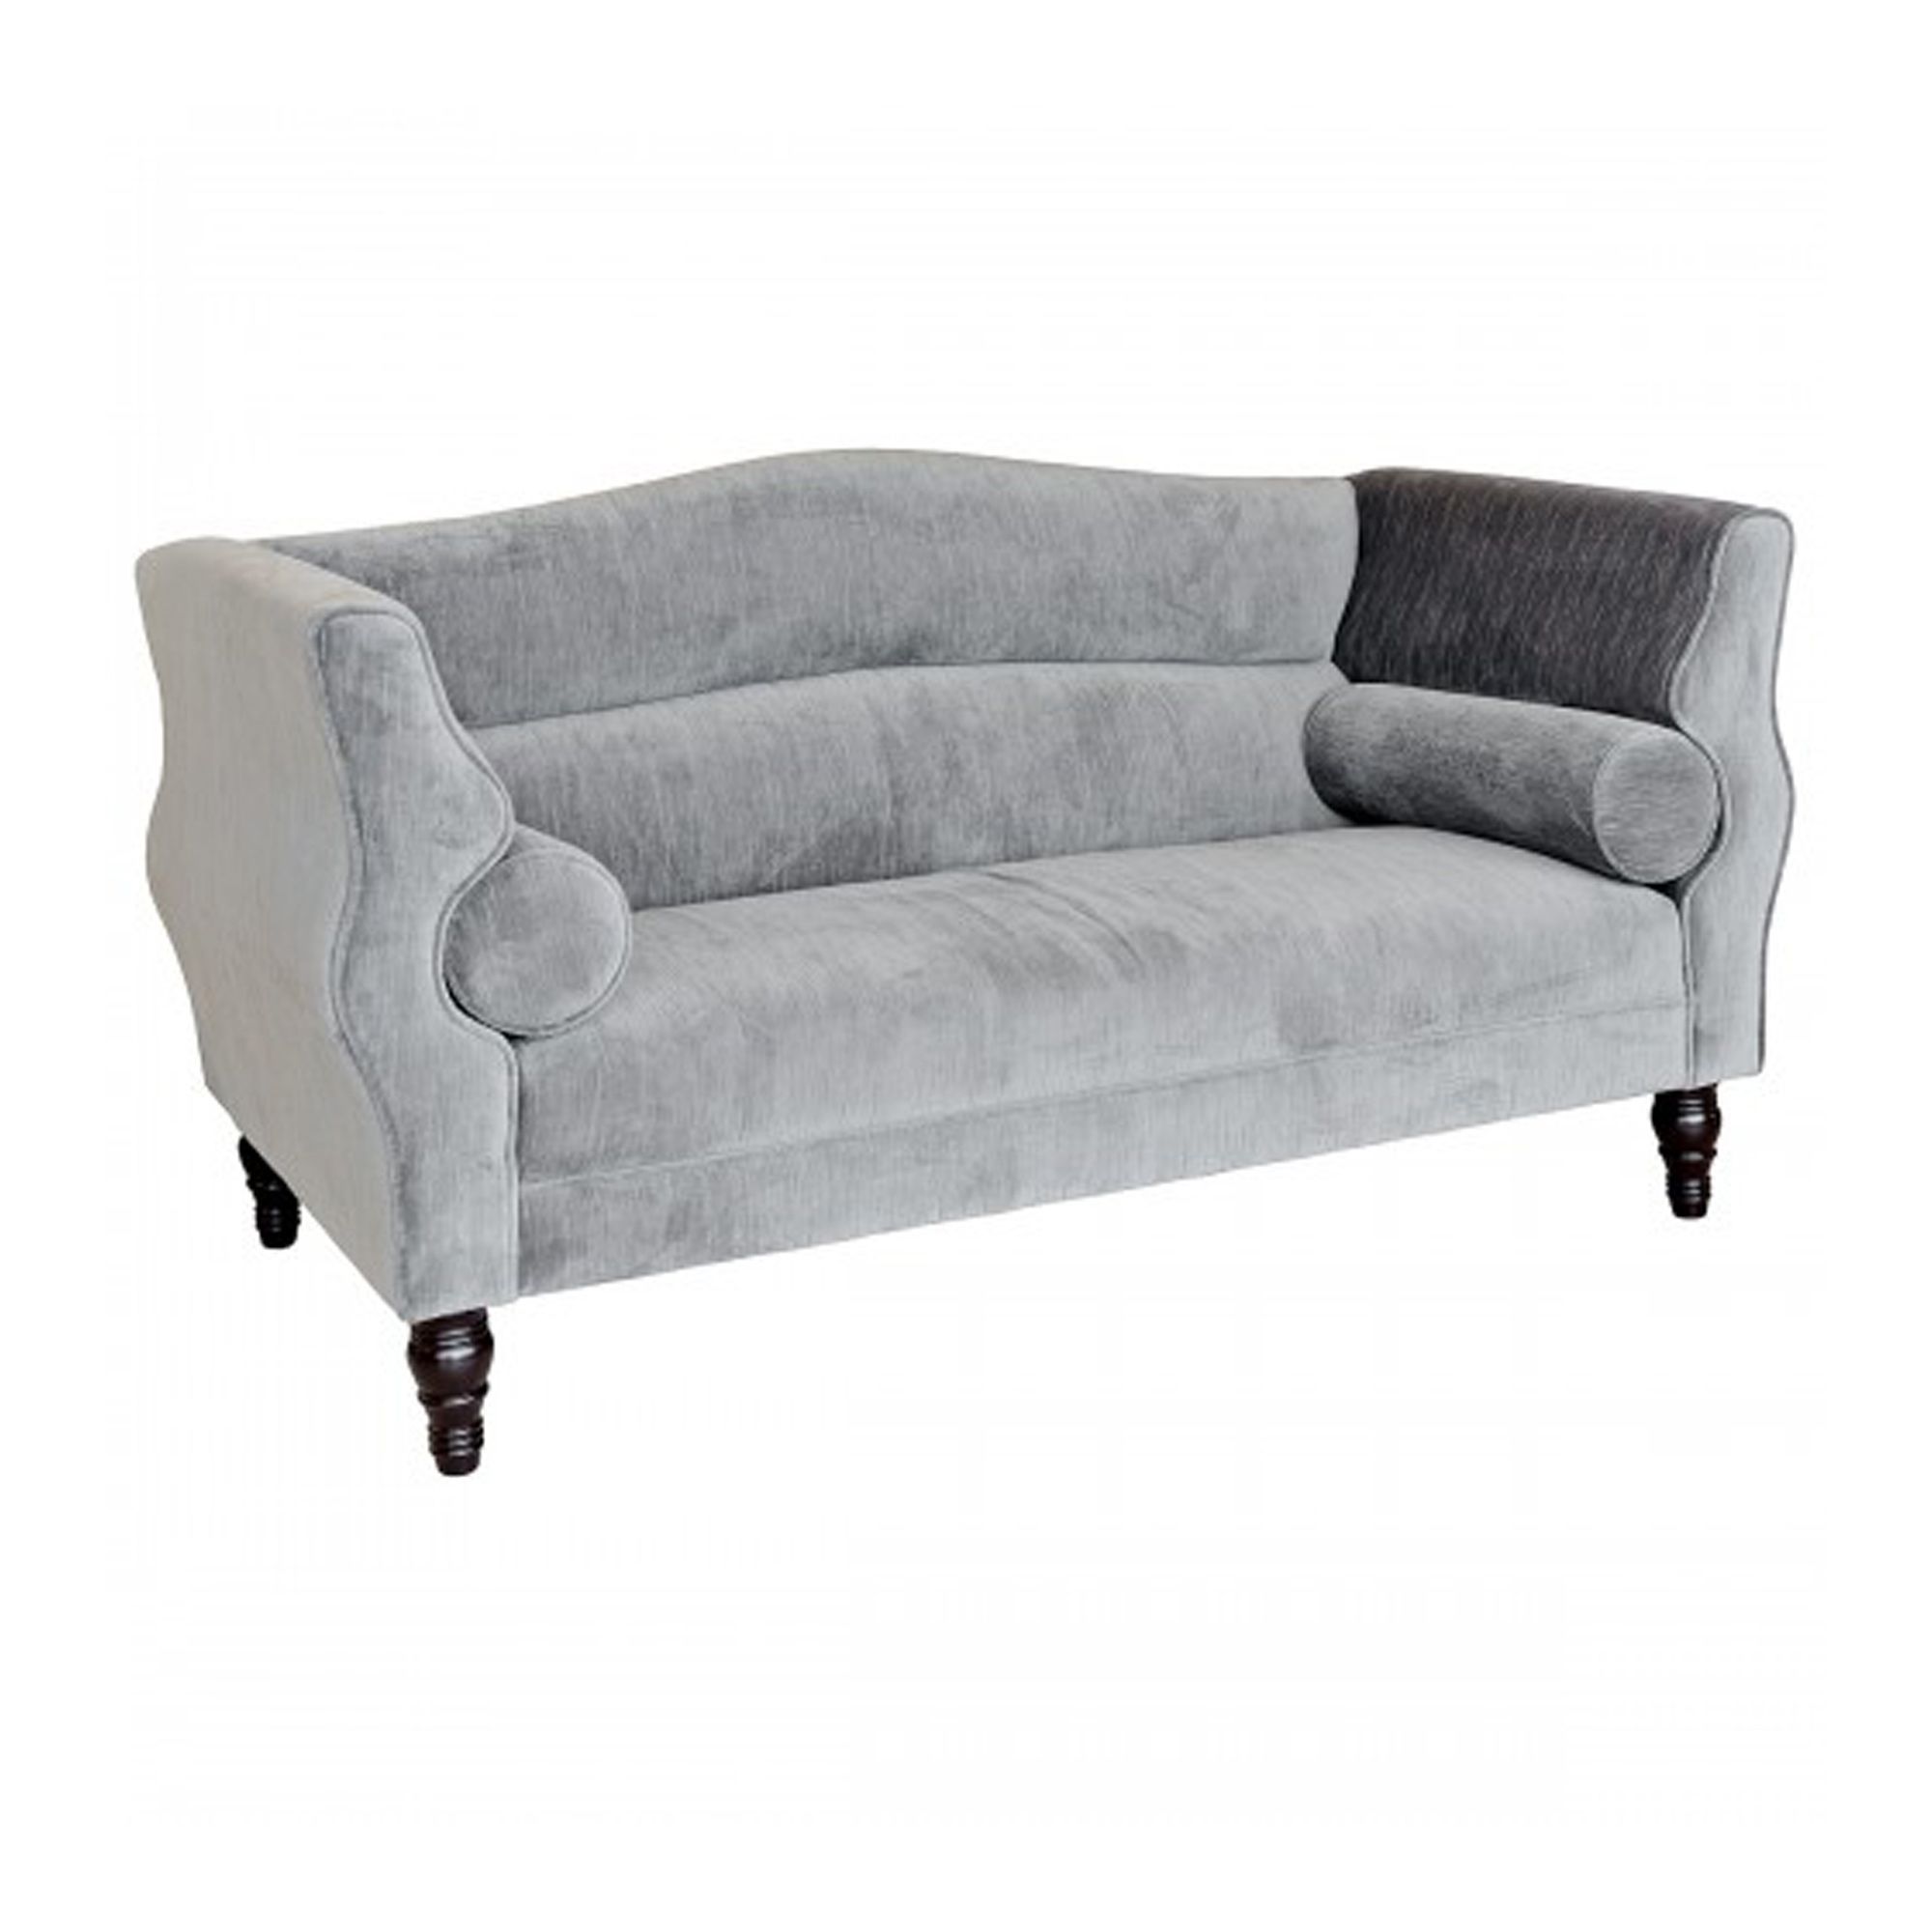 Janette Light Grey Sofa | Modern & Contemporary | Sofas Regarding Sofas In Light Gray (Gallery 21 of 22)